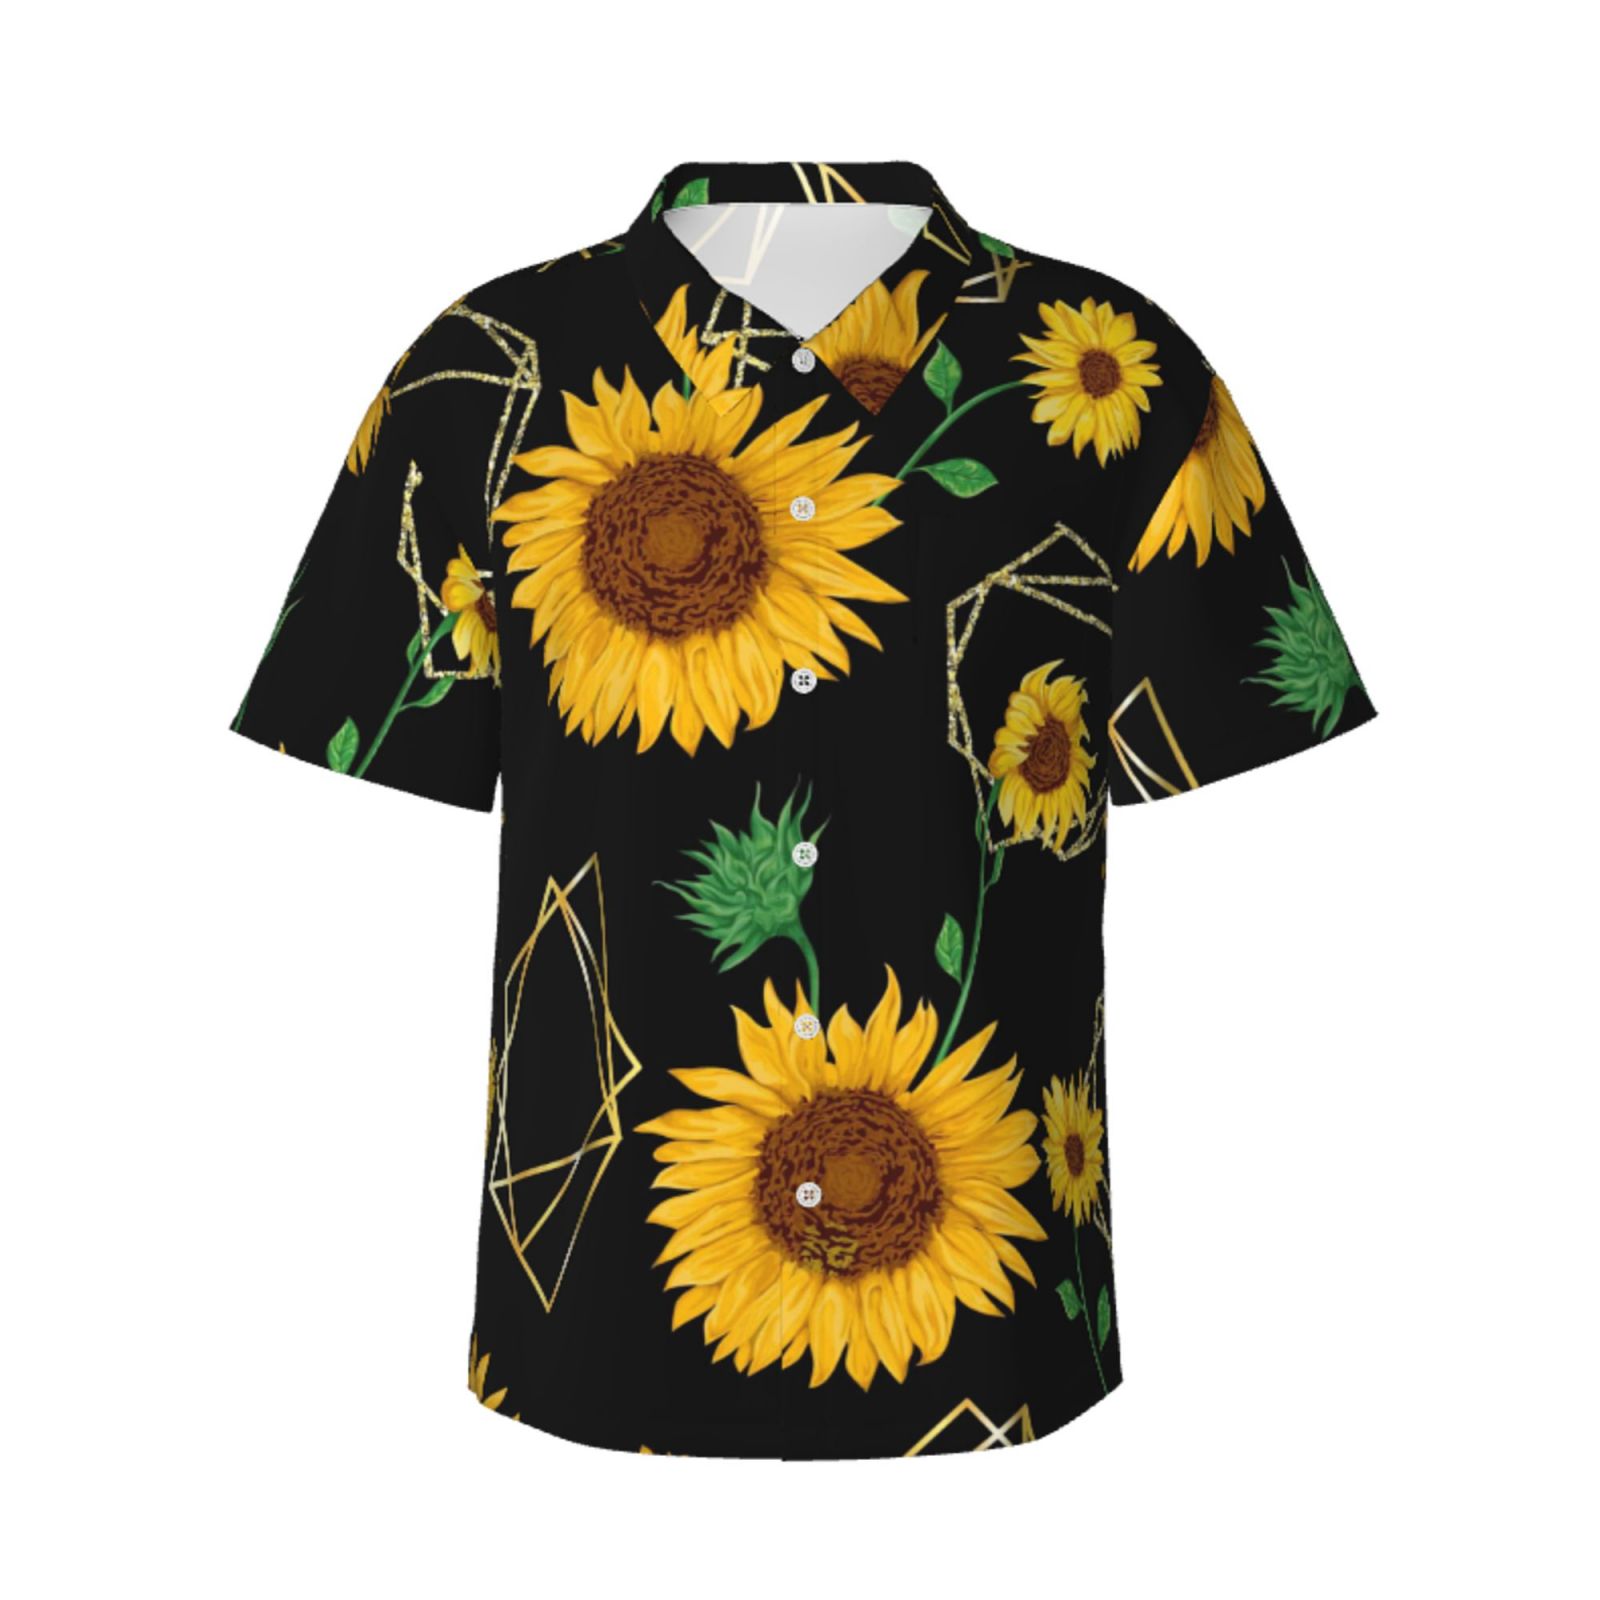 Bixox Men's Hawaiian Shirts Men's Sunflowers Print Short-Sleeve Shirt ...